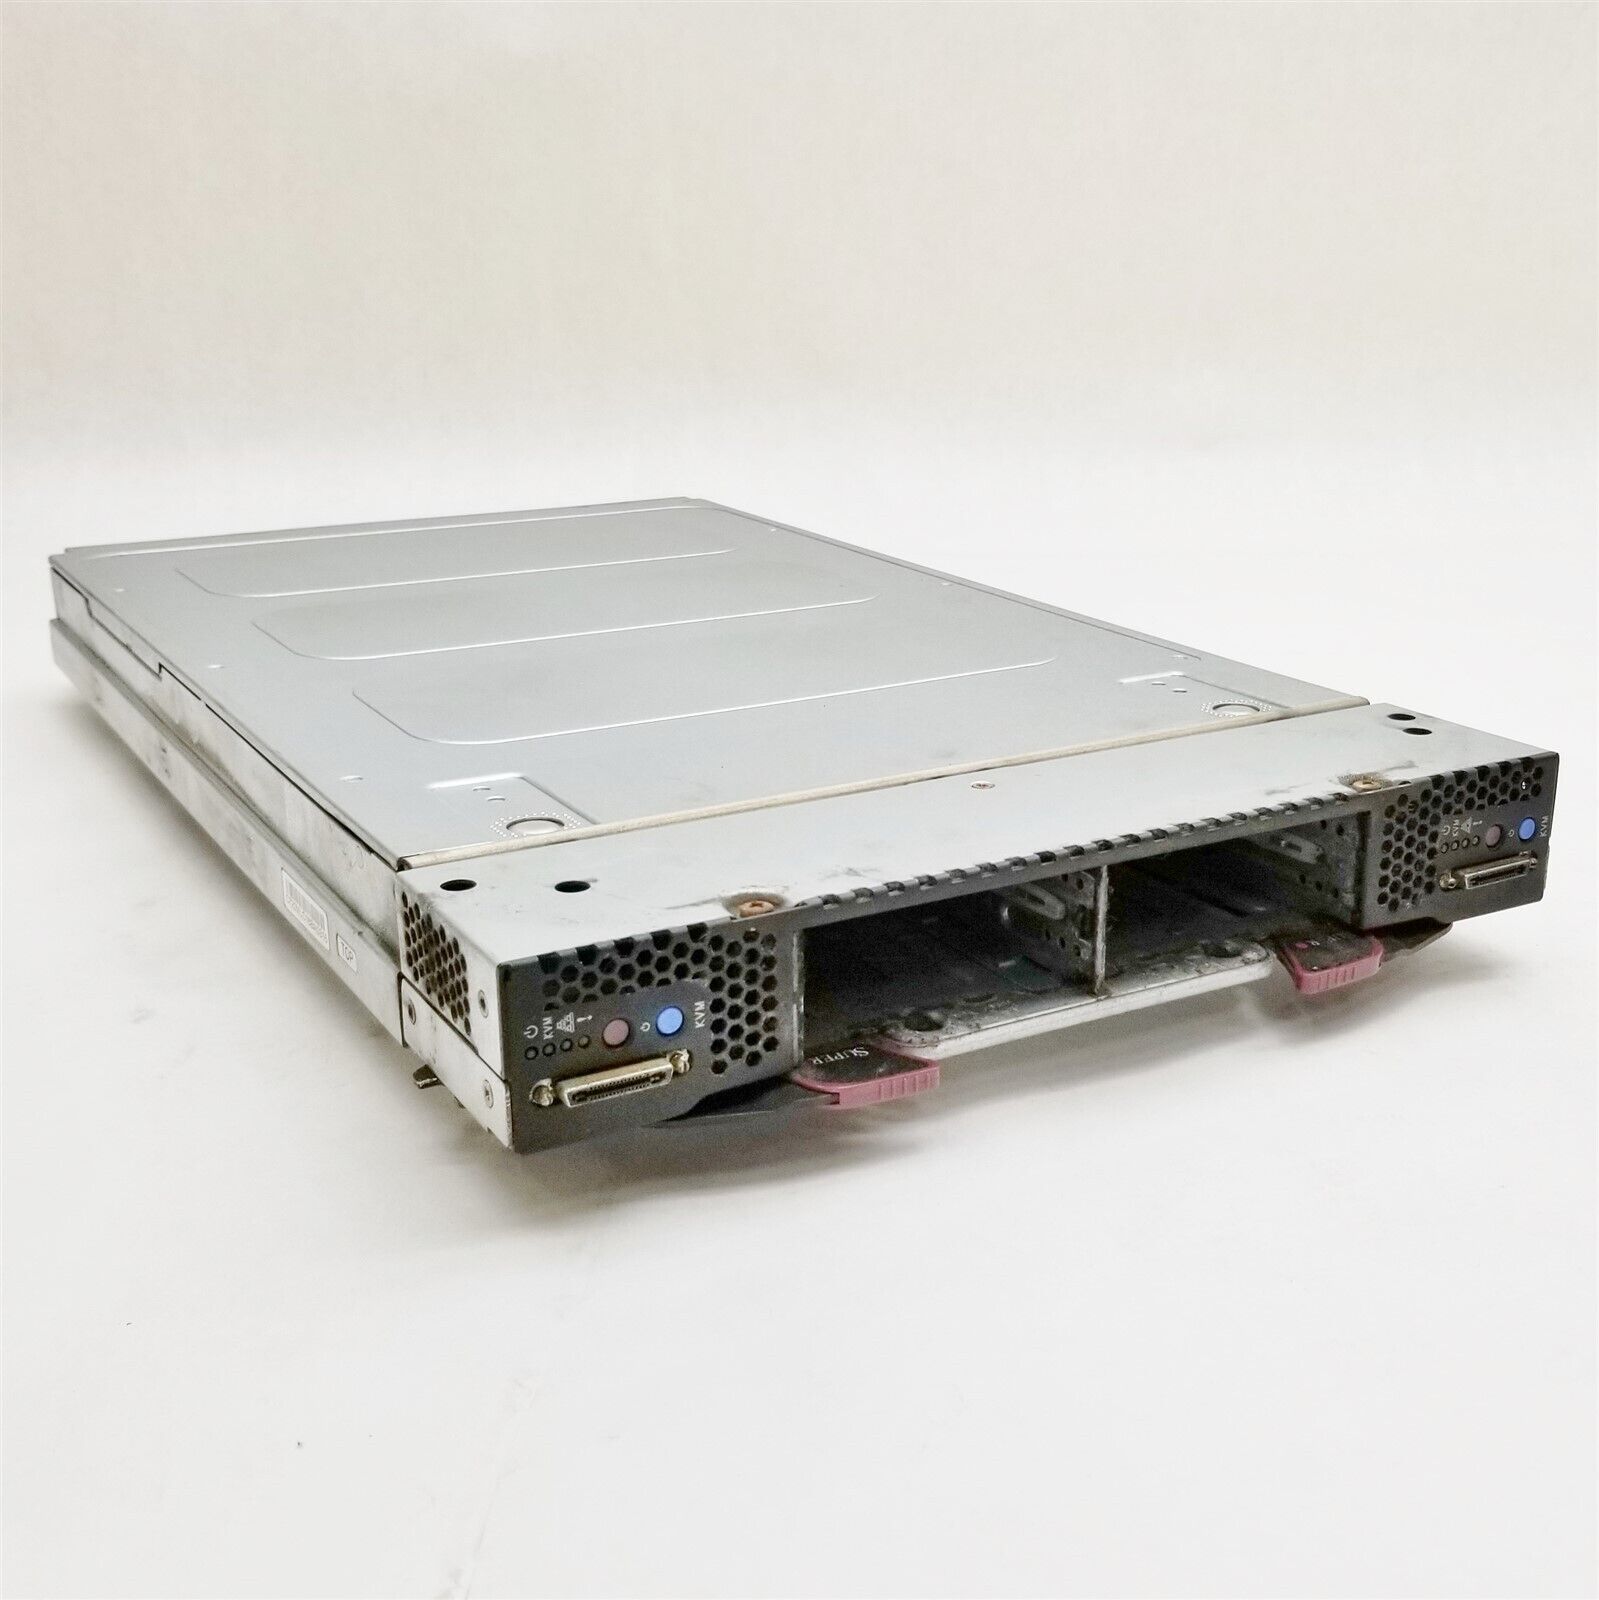 Supermicro SBI-7227R-T2 B9DRT Board 4*E5-2650 2.0GHz NO RAM/HDD Server Blade